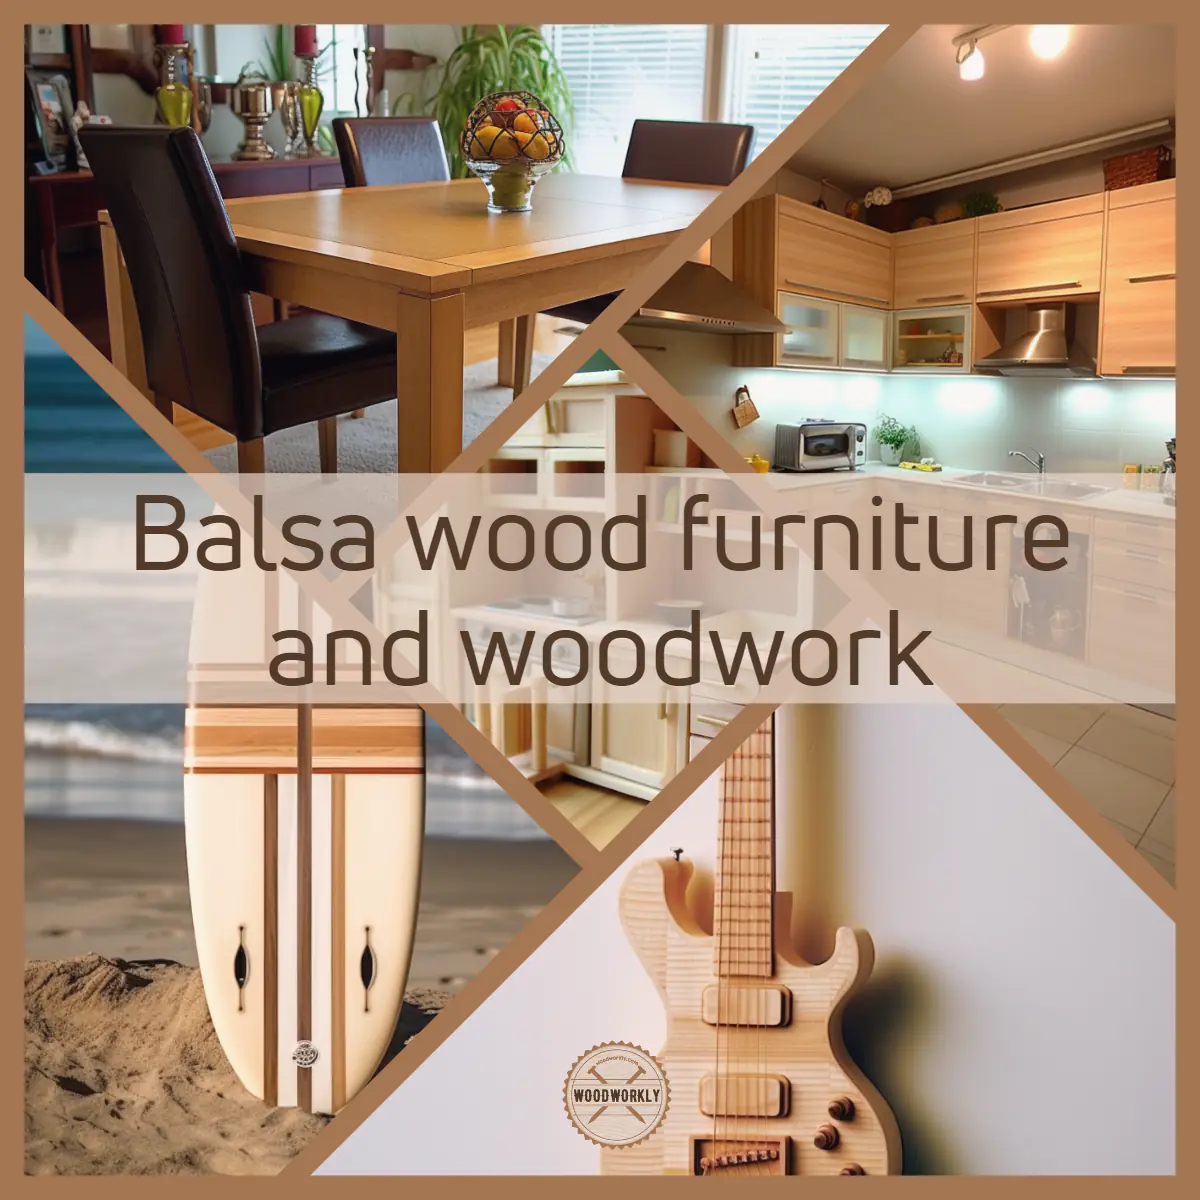 Balsa wood furniture and woodwork